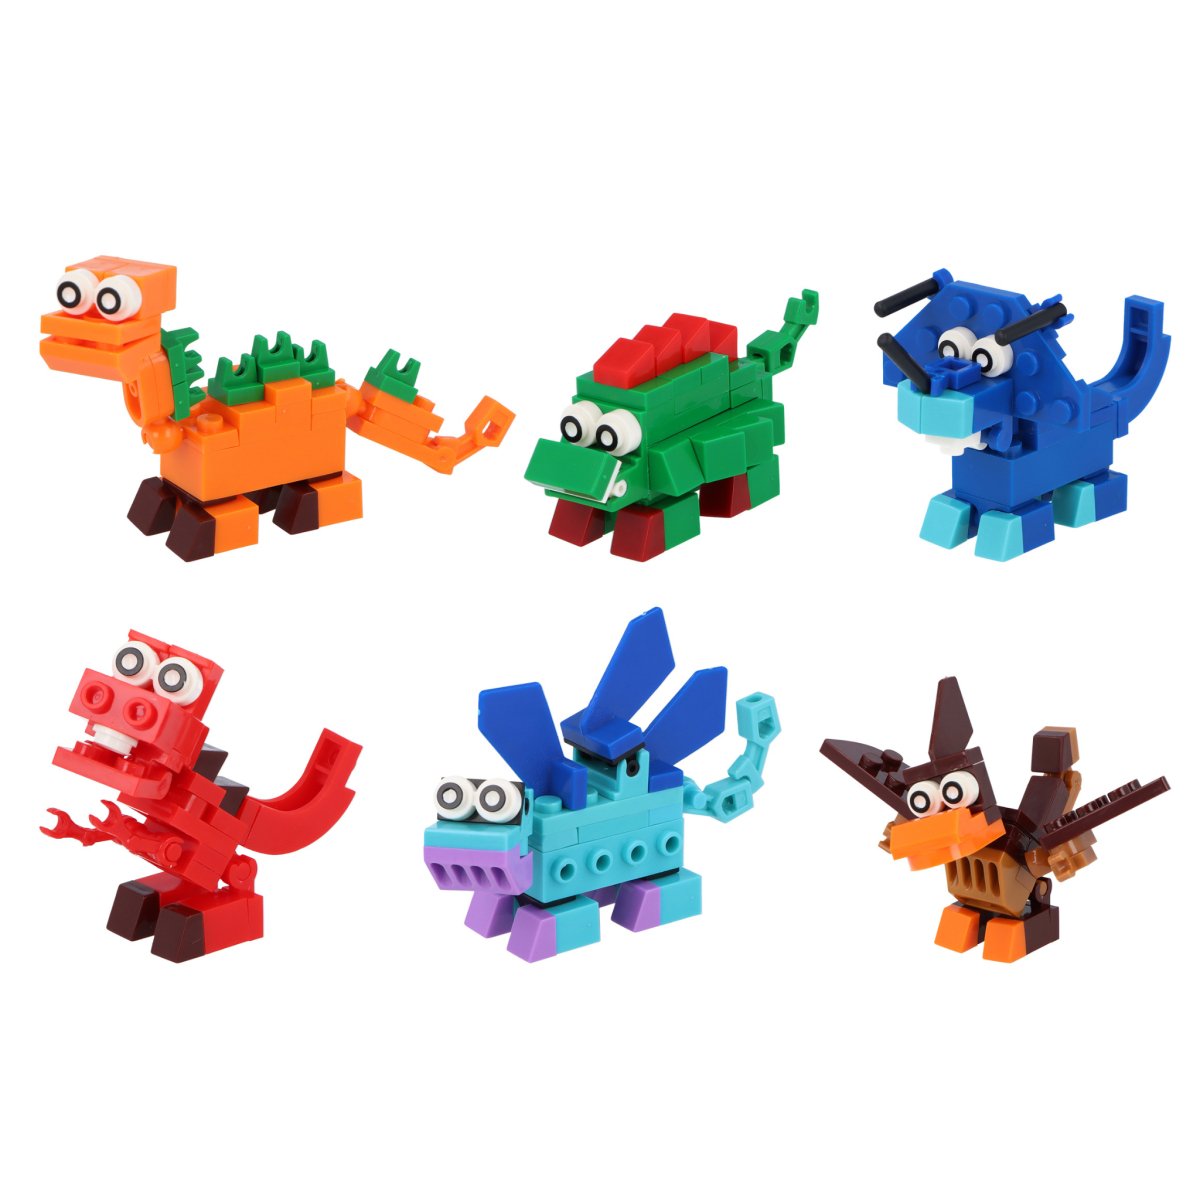 Cute Dinosaur Brick Kits - Kids Party Craft